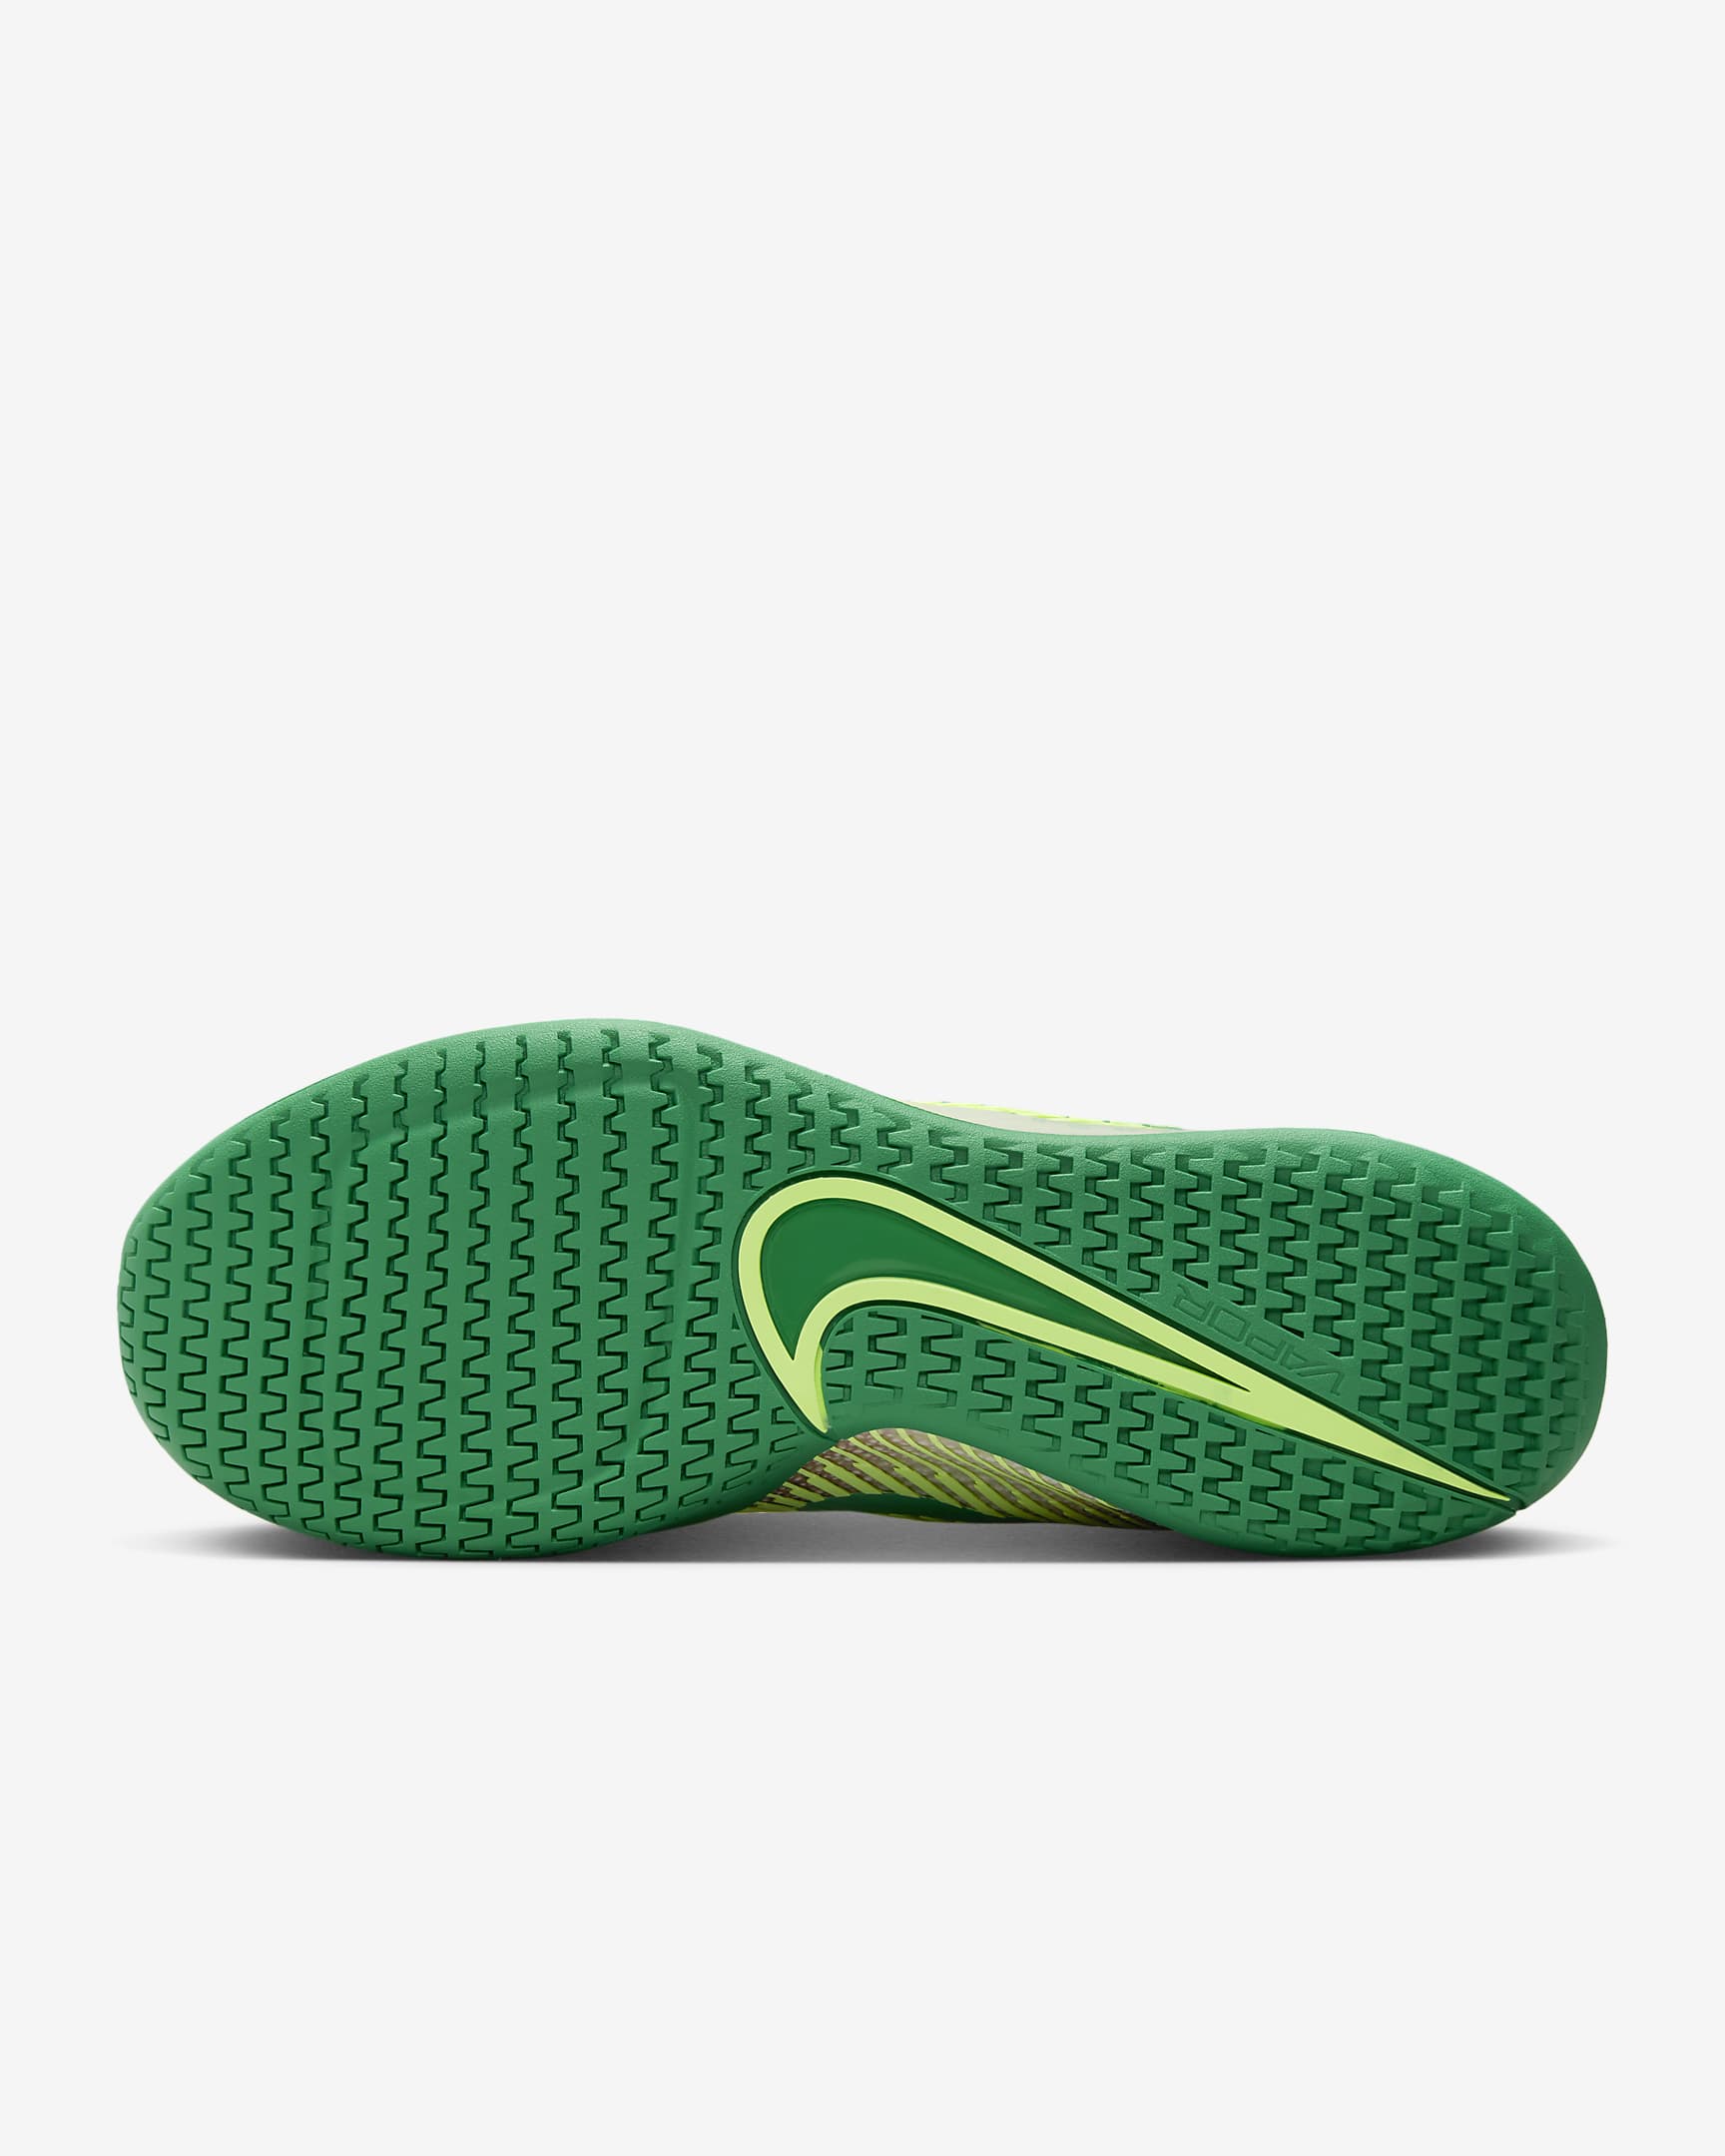 NikeCourt Air Zoom Vapor 11 Premium Men's Hard Court Tennis Shoes. Nike HR